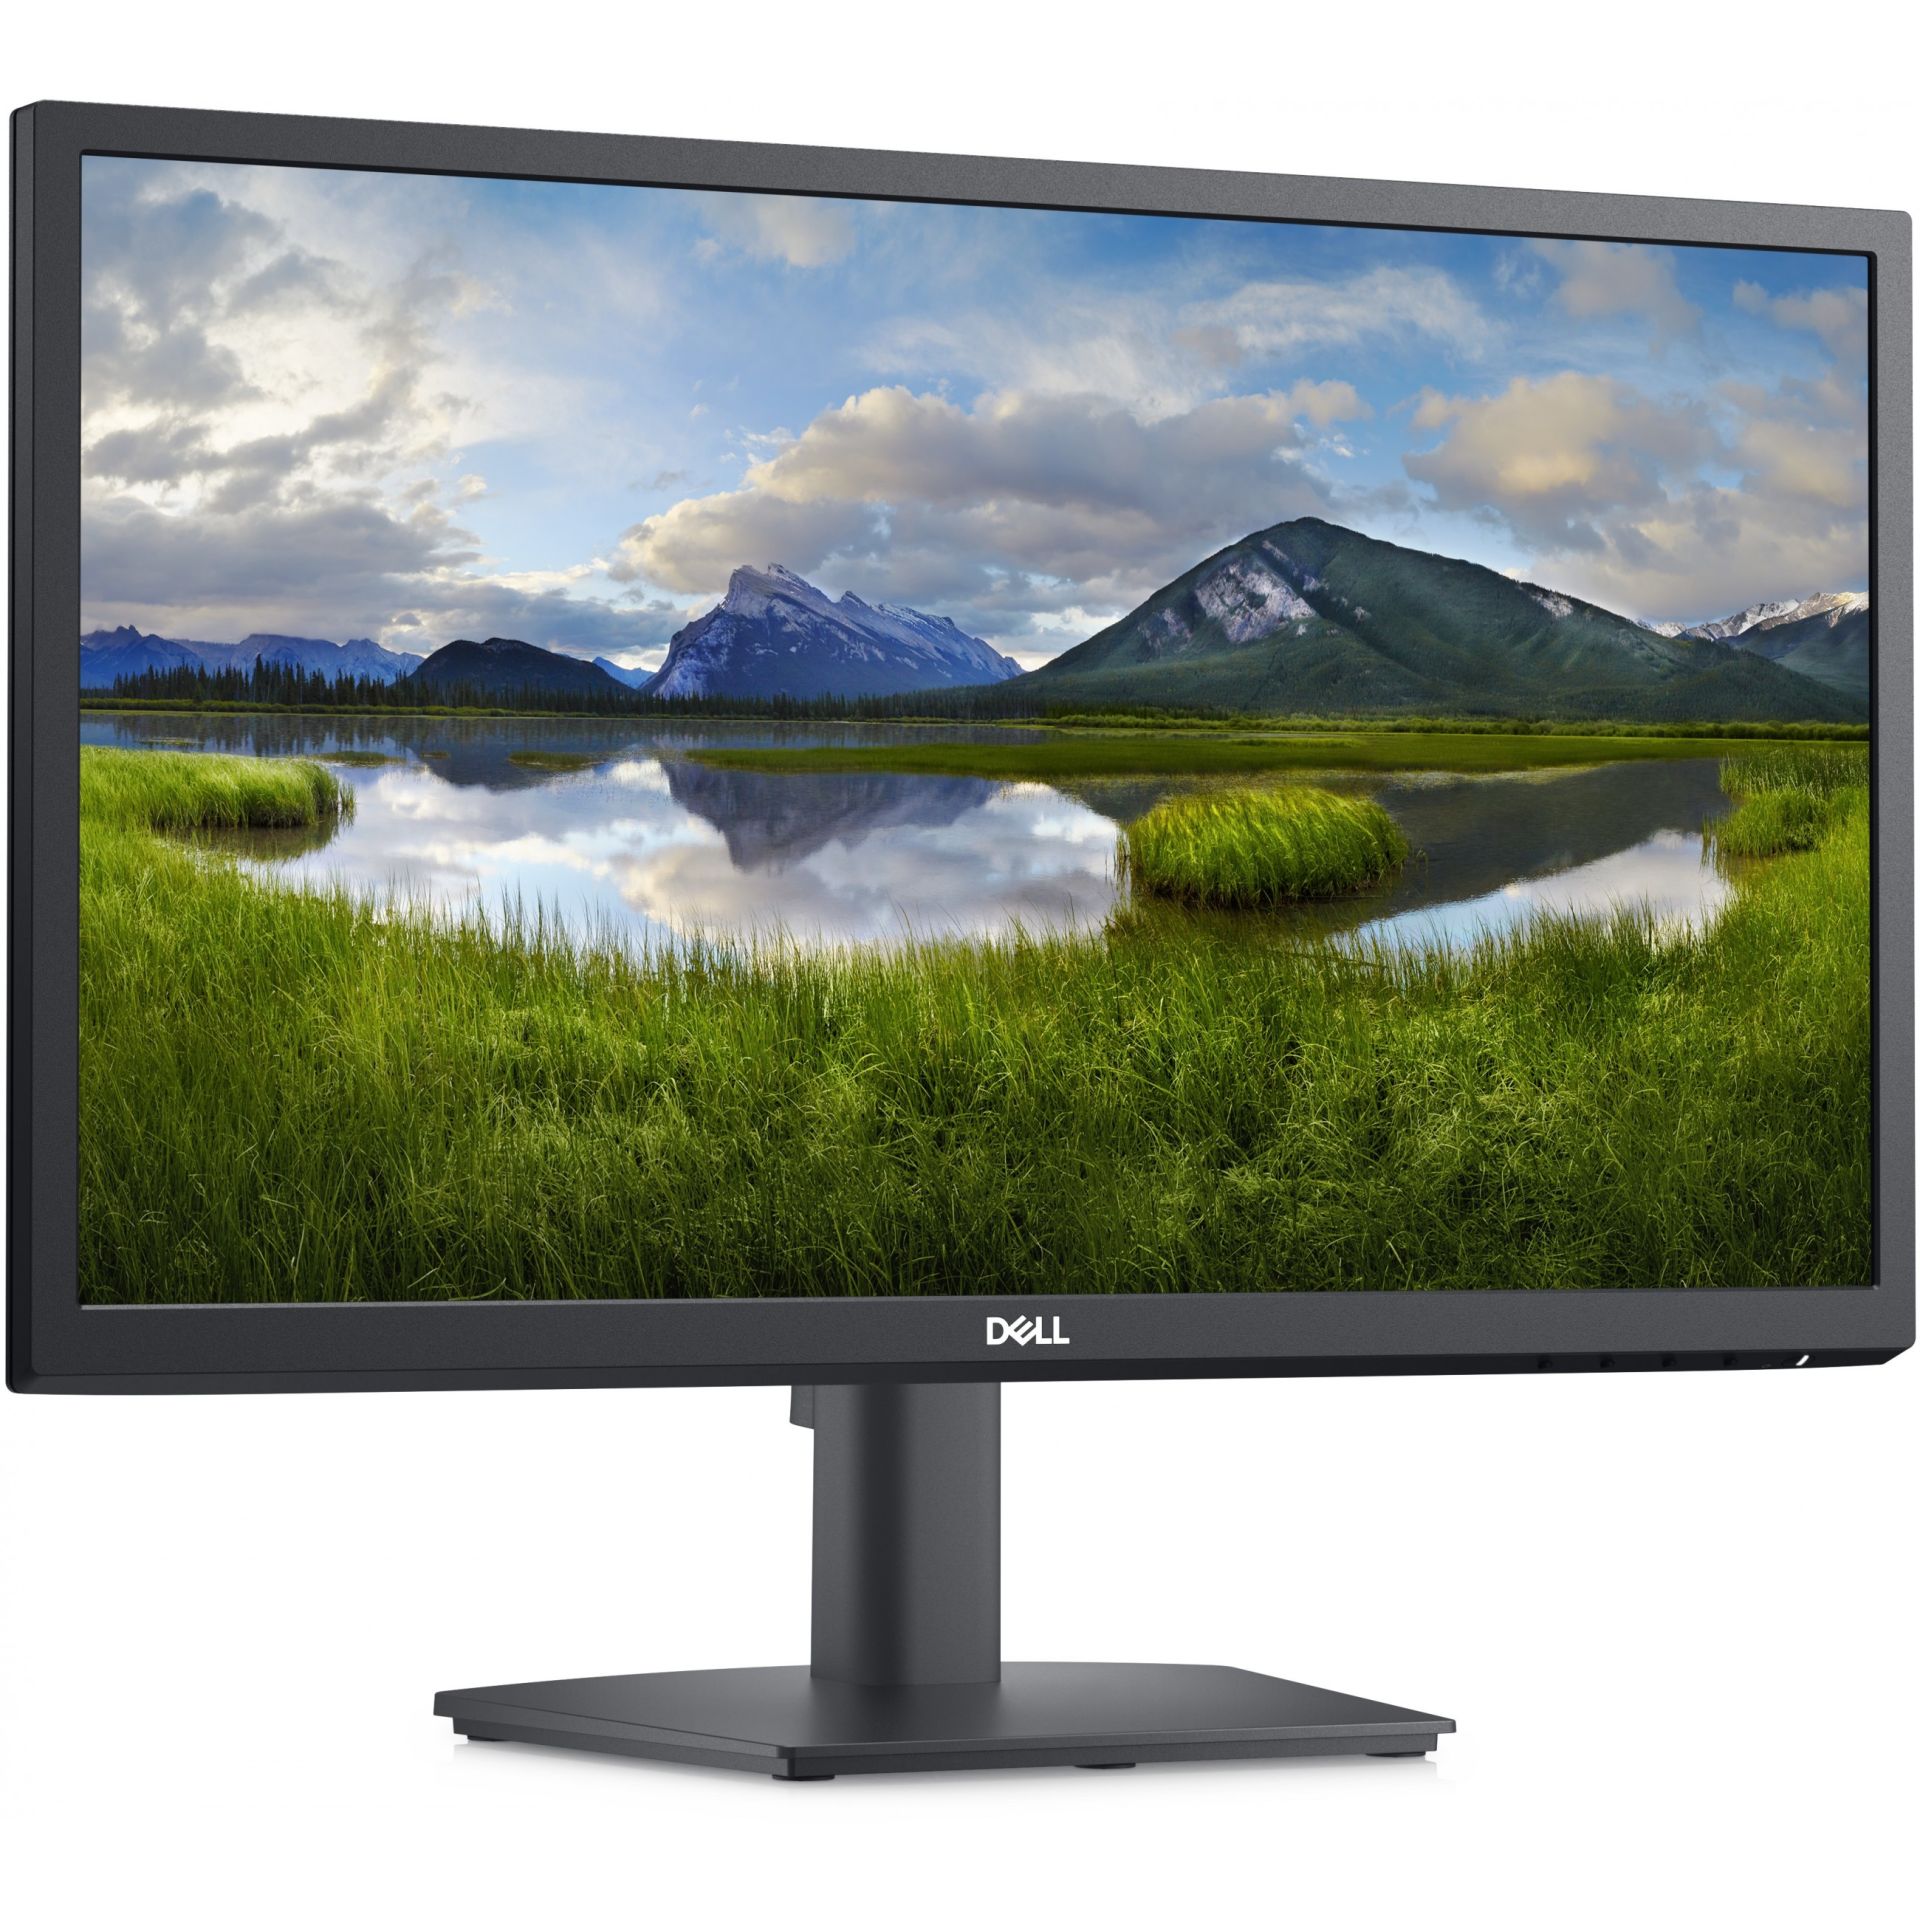 DELL E Series 22 Monitor – E2222H, 54,5 cm (21.4 Zoll), 1920 x 1080 Pixel, Full HD, LCD, 10 ms, Schwarz